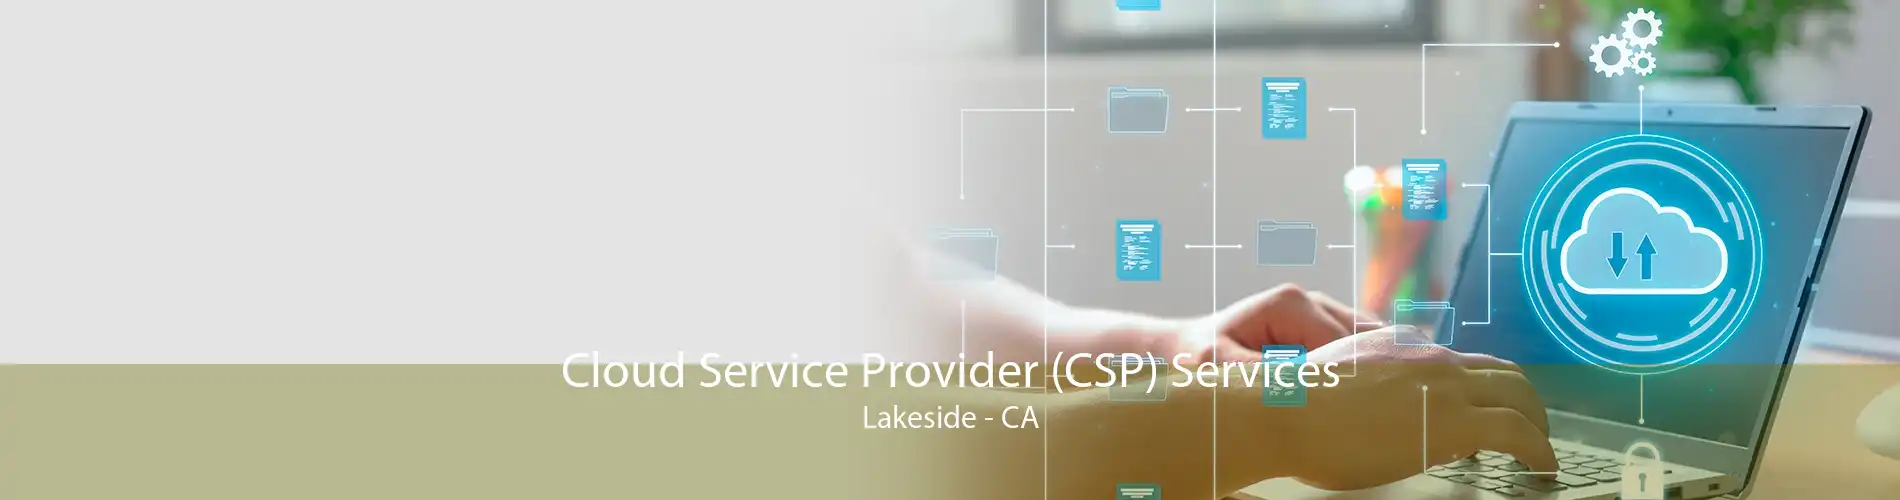 Cloud Service Provider (CSP) Services Lakeside - CA